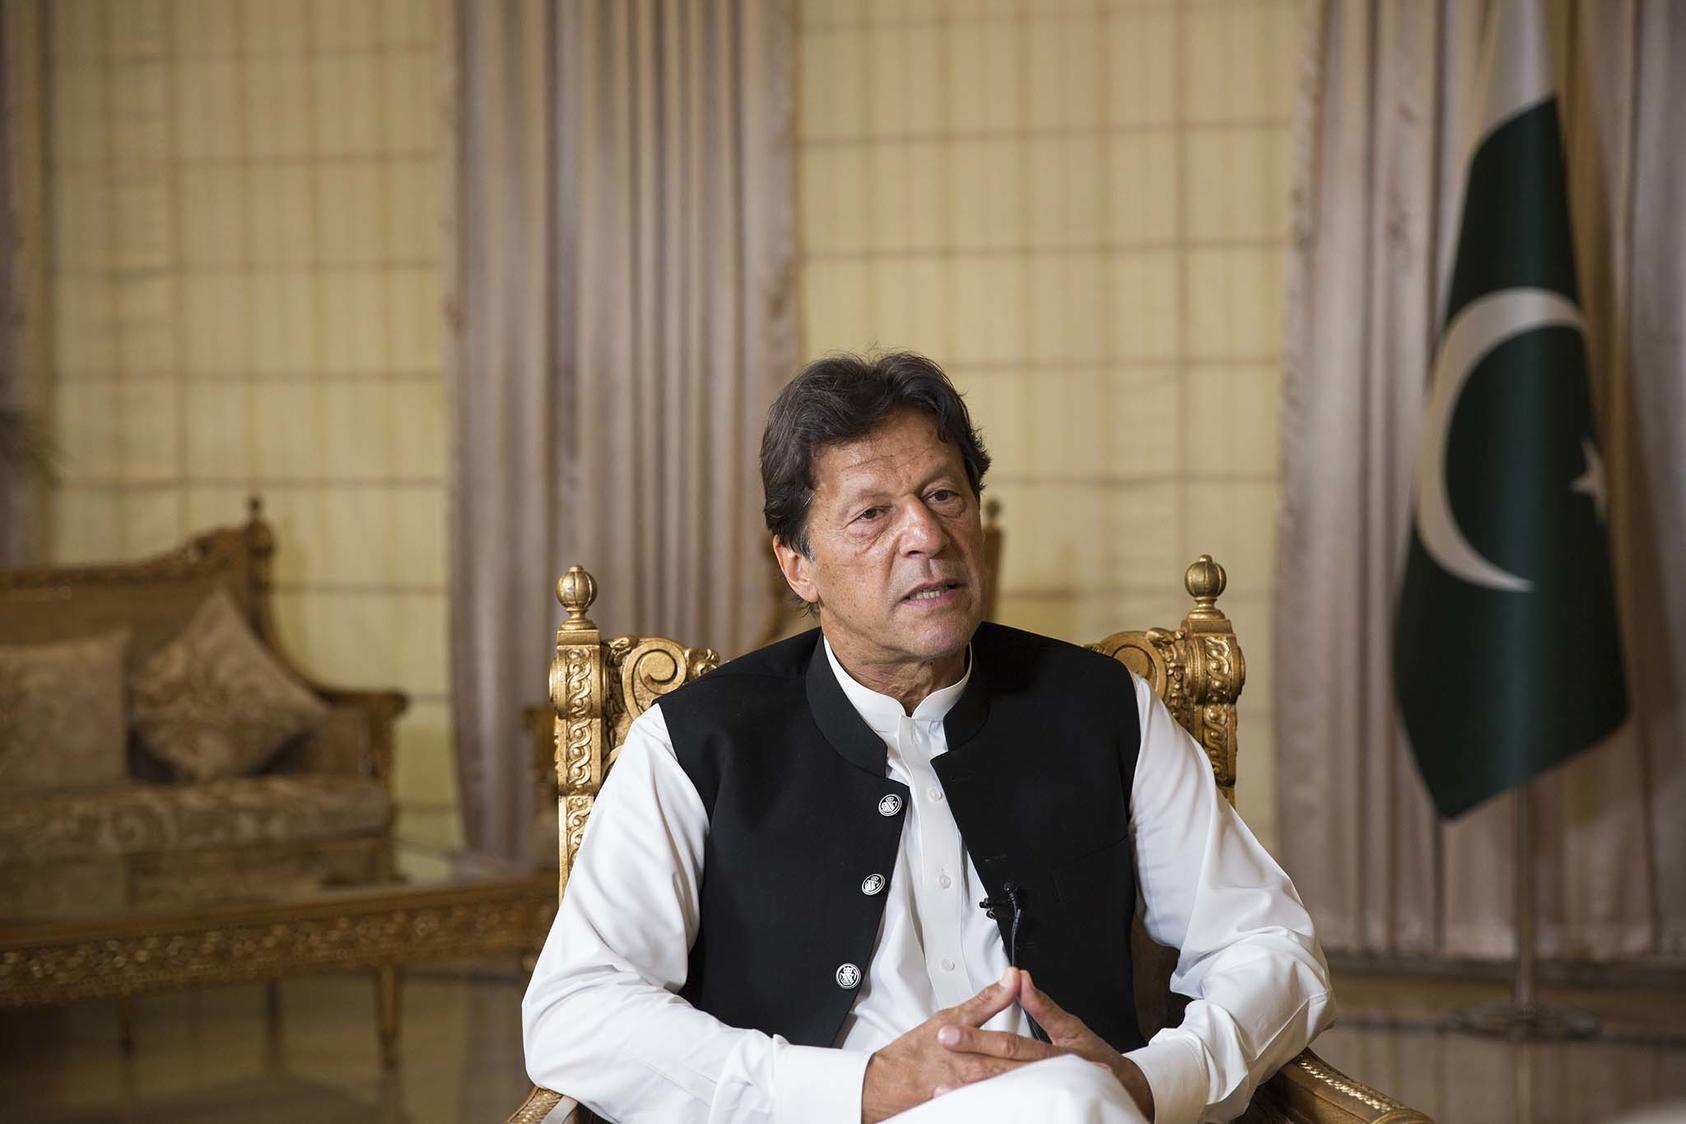 Prime Minister Imran Khan of Pakistan at his residence in Islamabad, April 9, 2019. (Saiyna Bashir/The New York Times)